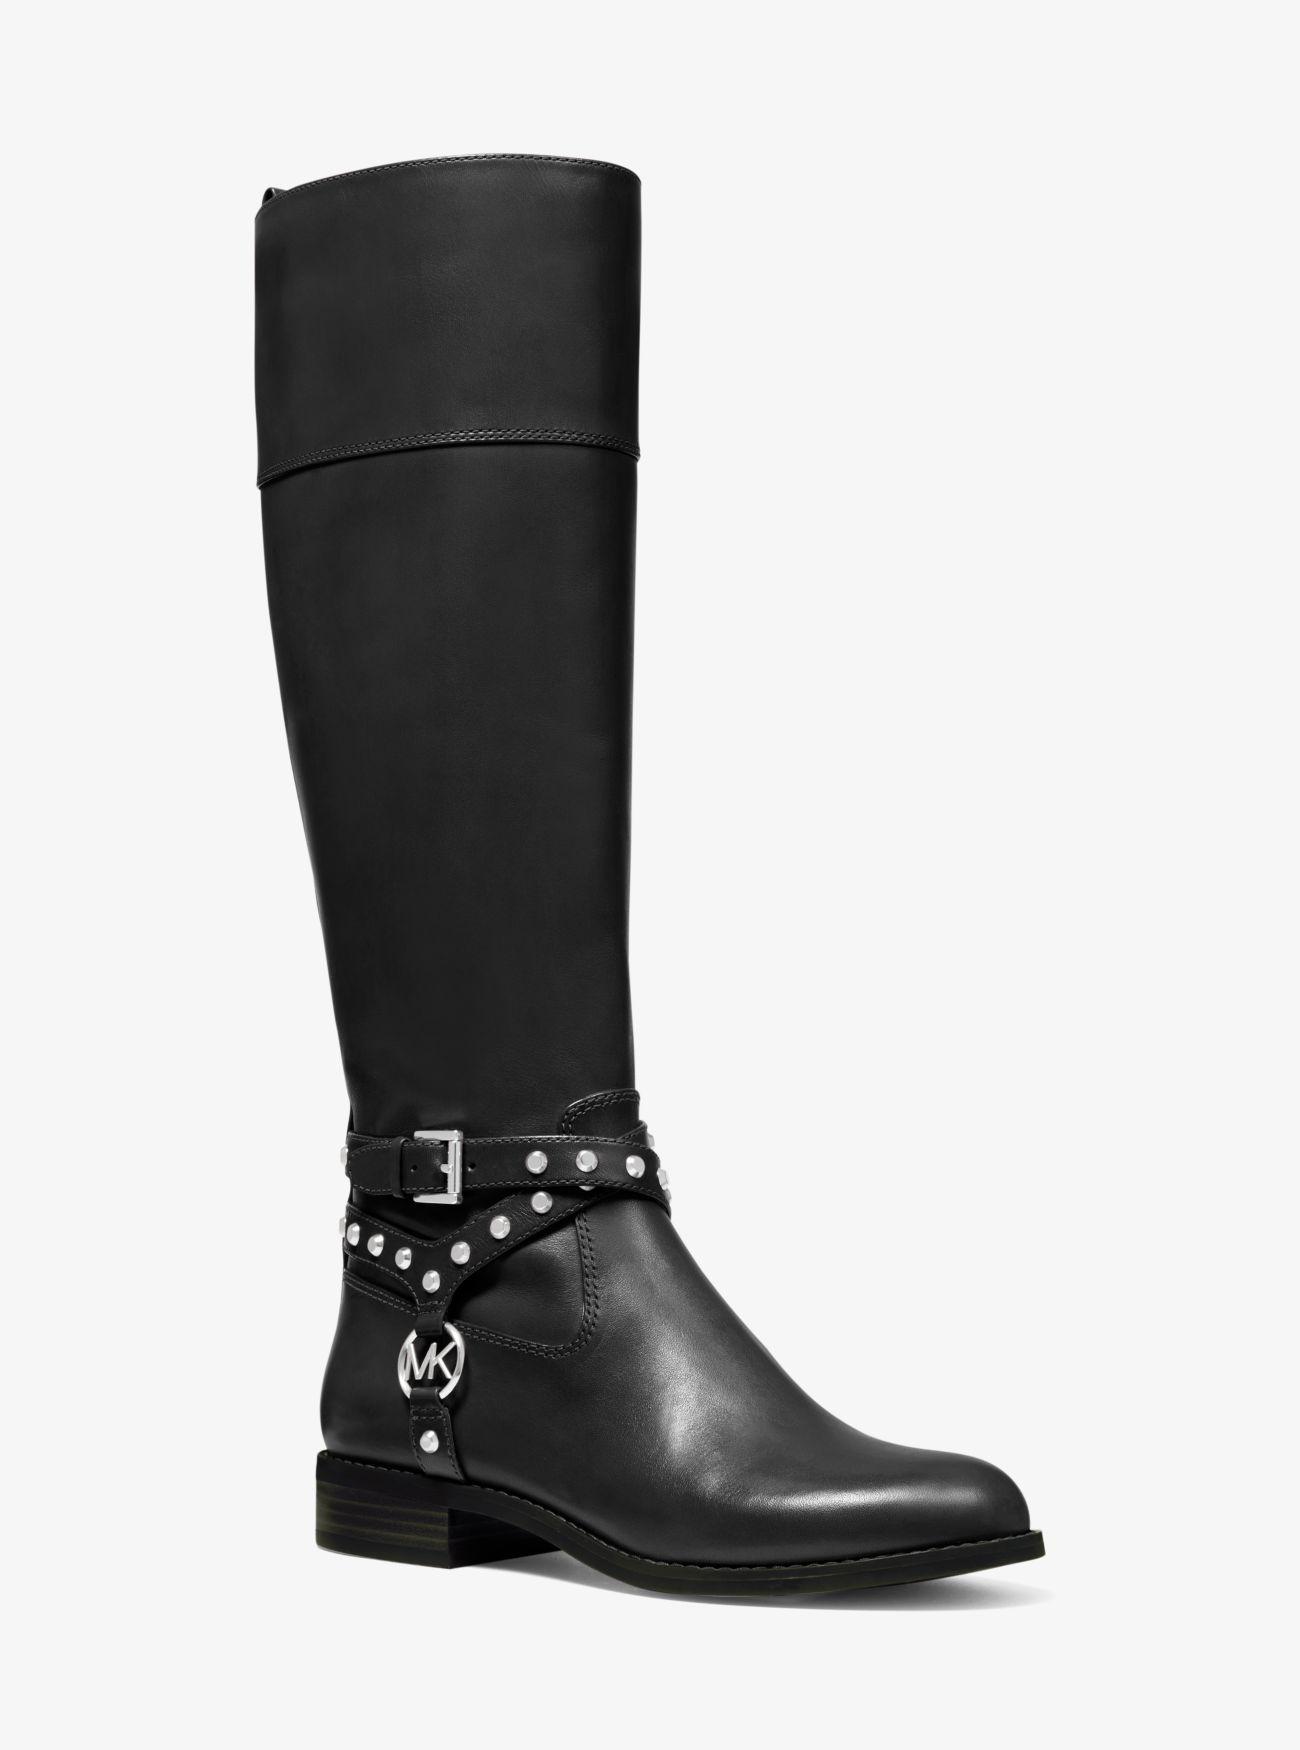 MICHAEL Michael Kors Preston Studded Leather Boot in Black - Lyst